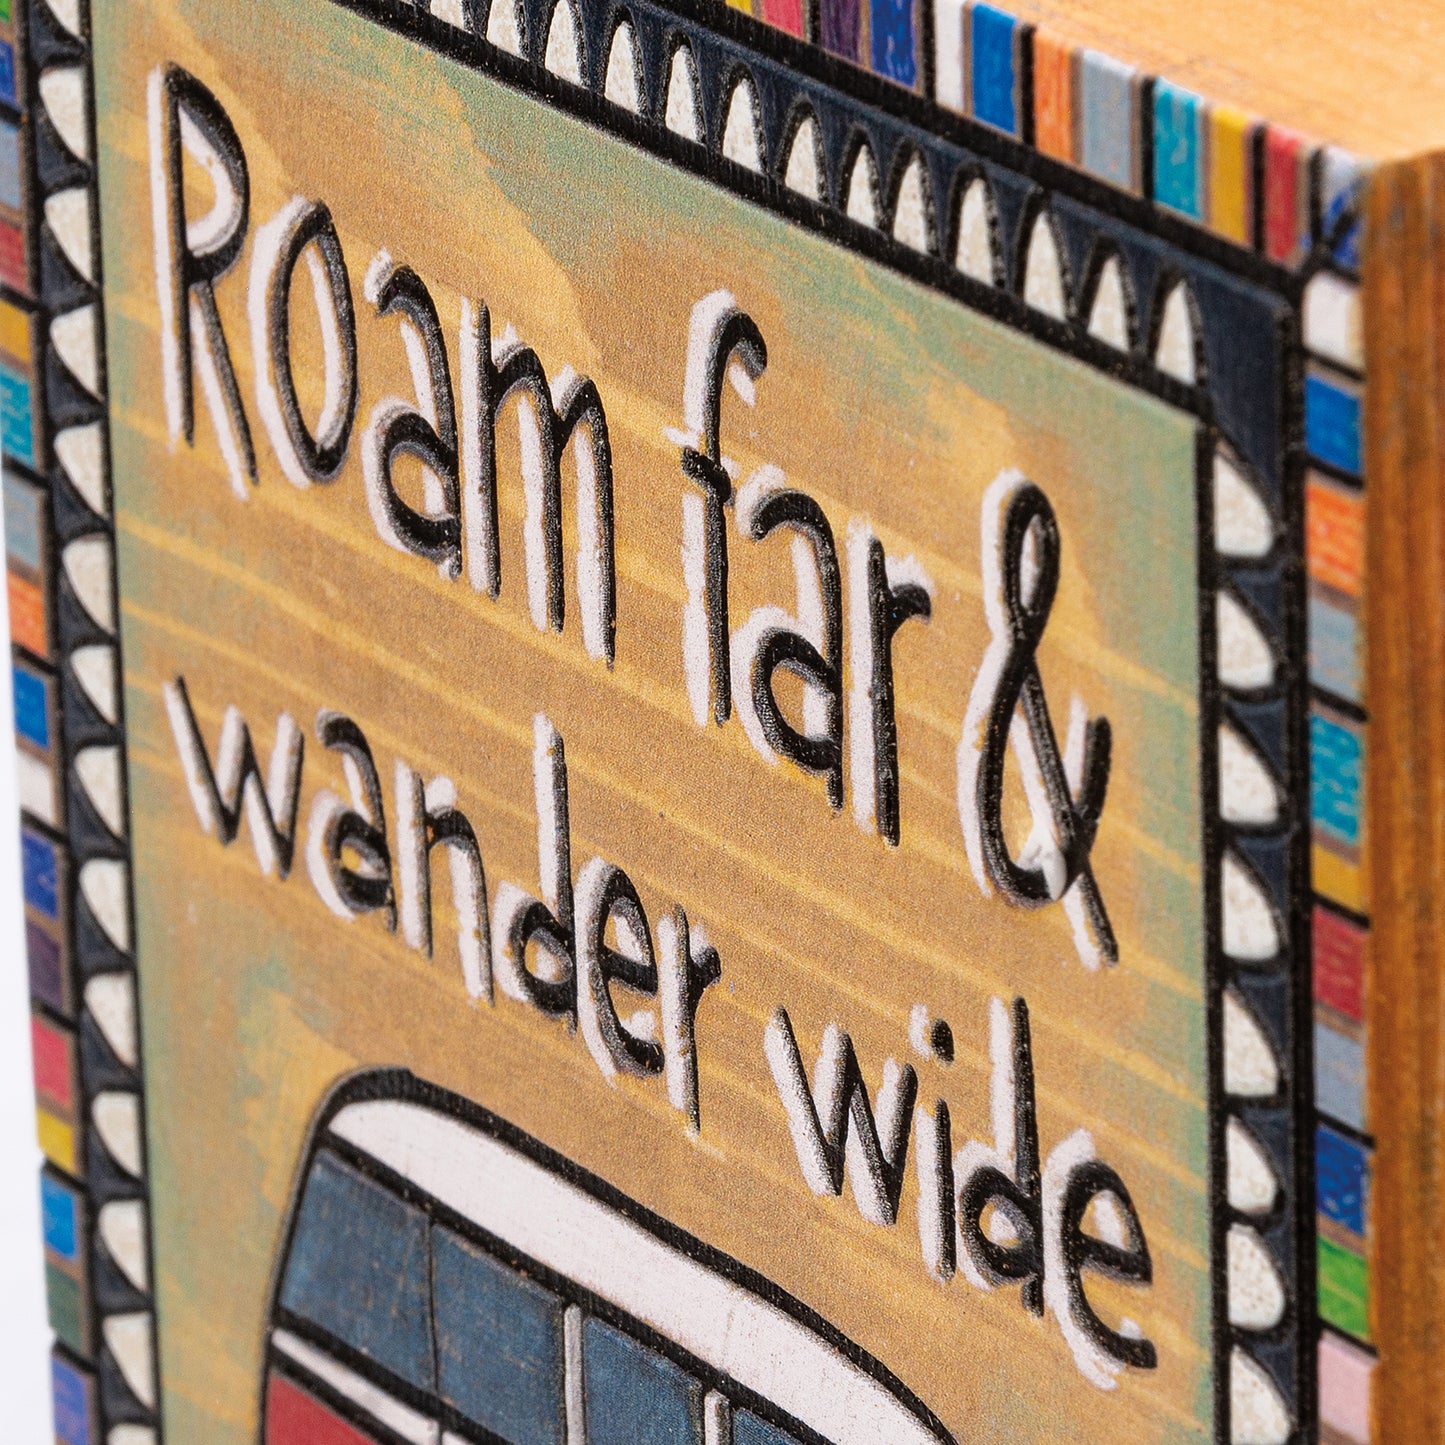 Box Sign - "Roam Far & Wander Wide"